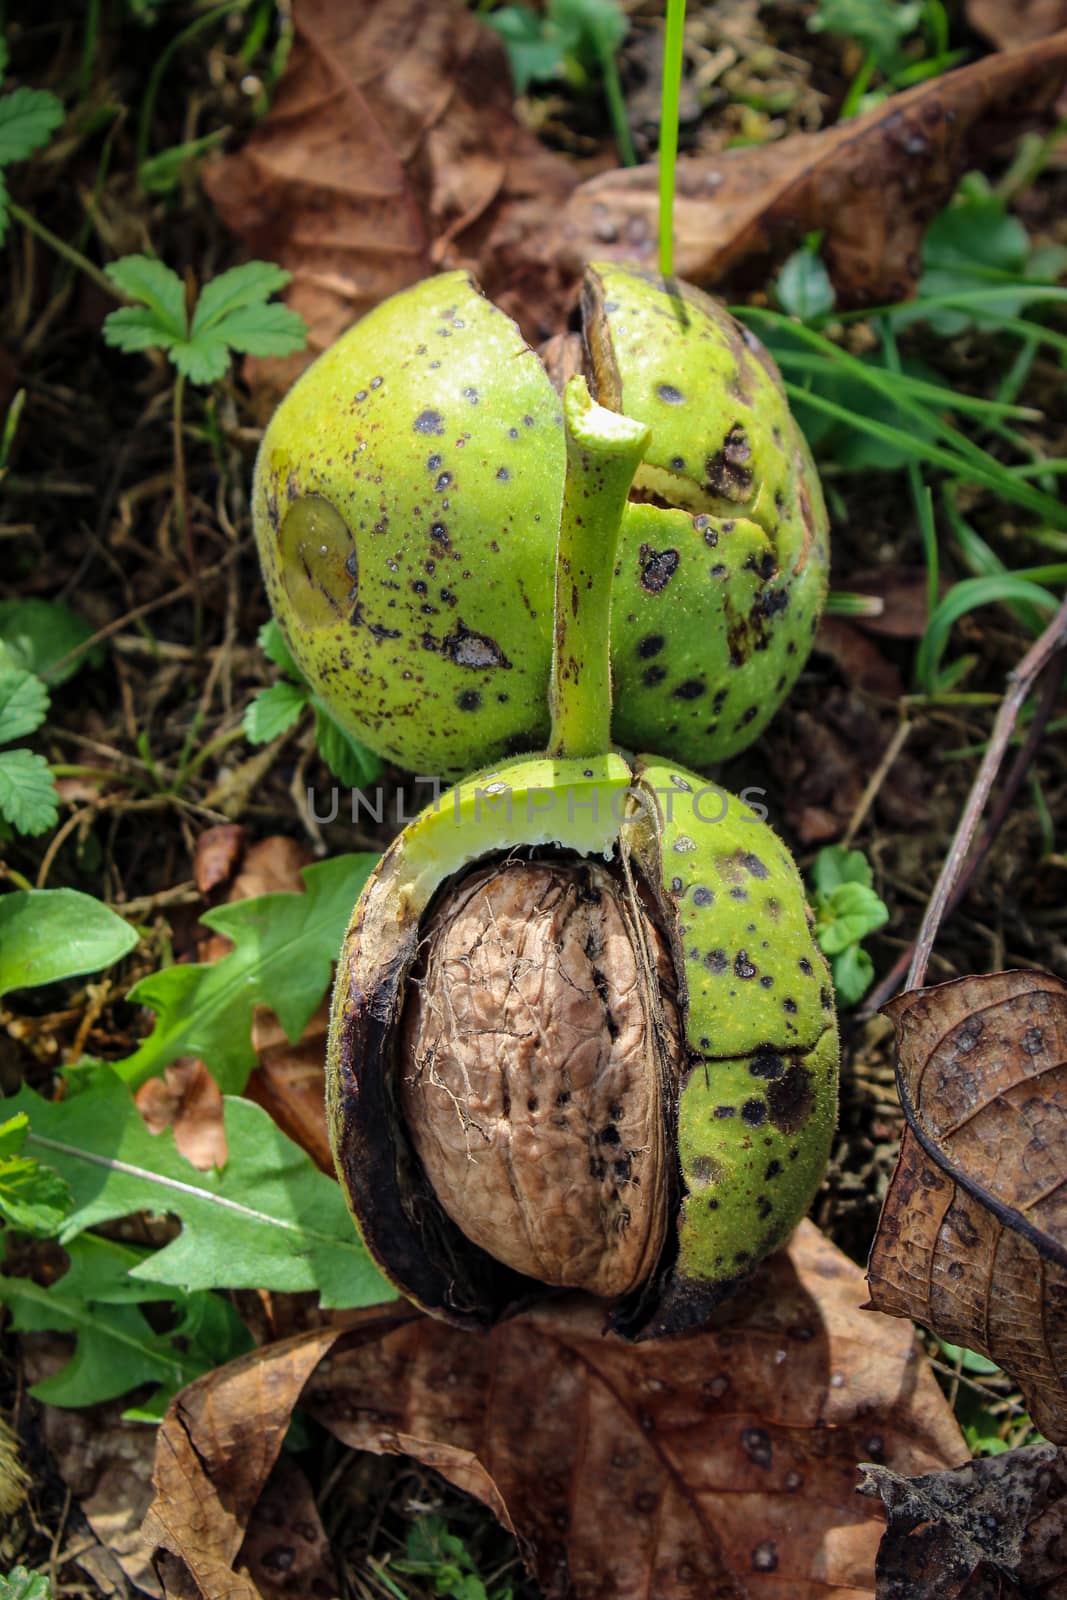 Two walnuts inside a cracked green walnut shell on the ground. Vertical shot. Zavidovici, Bosnia and Herzegovina.